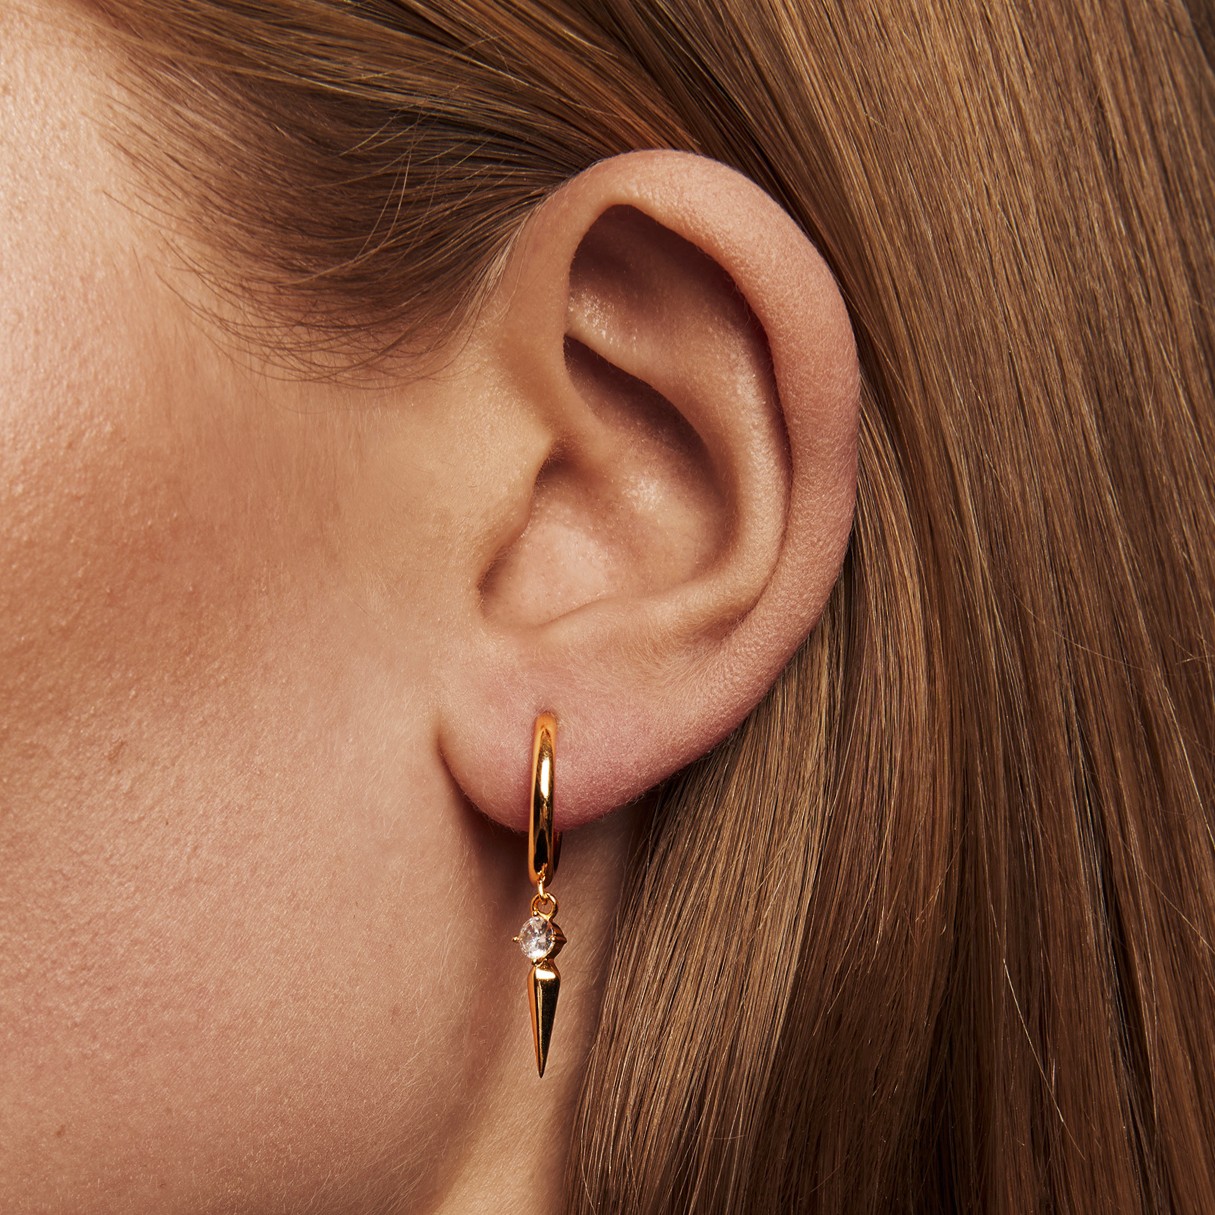 Saga earrings